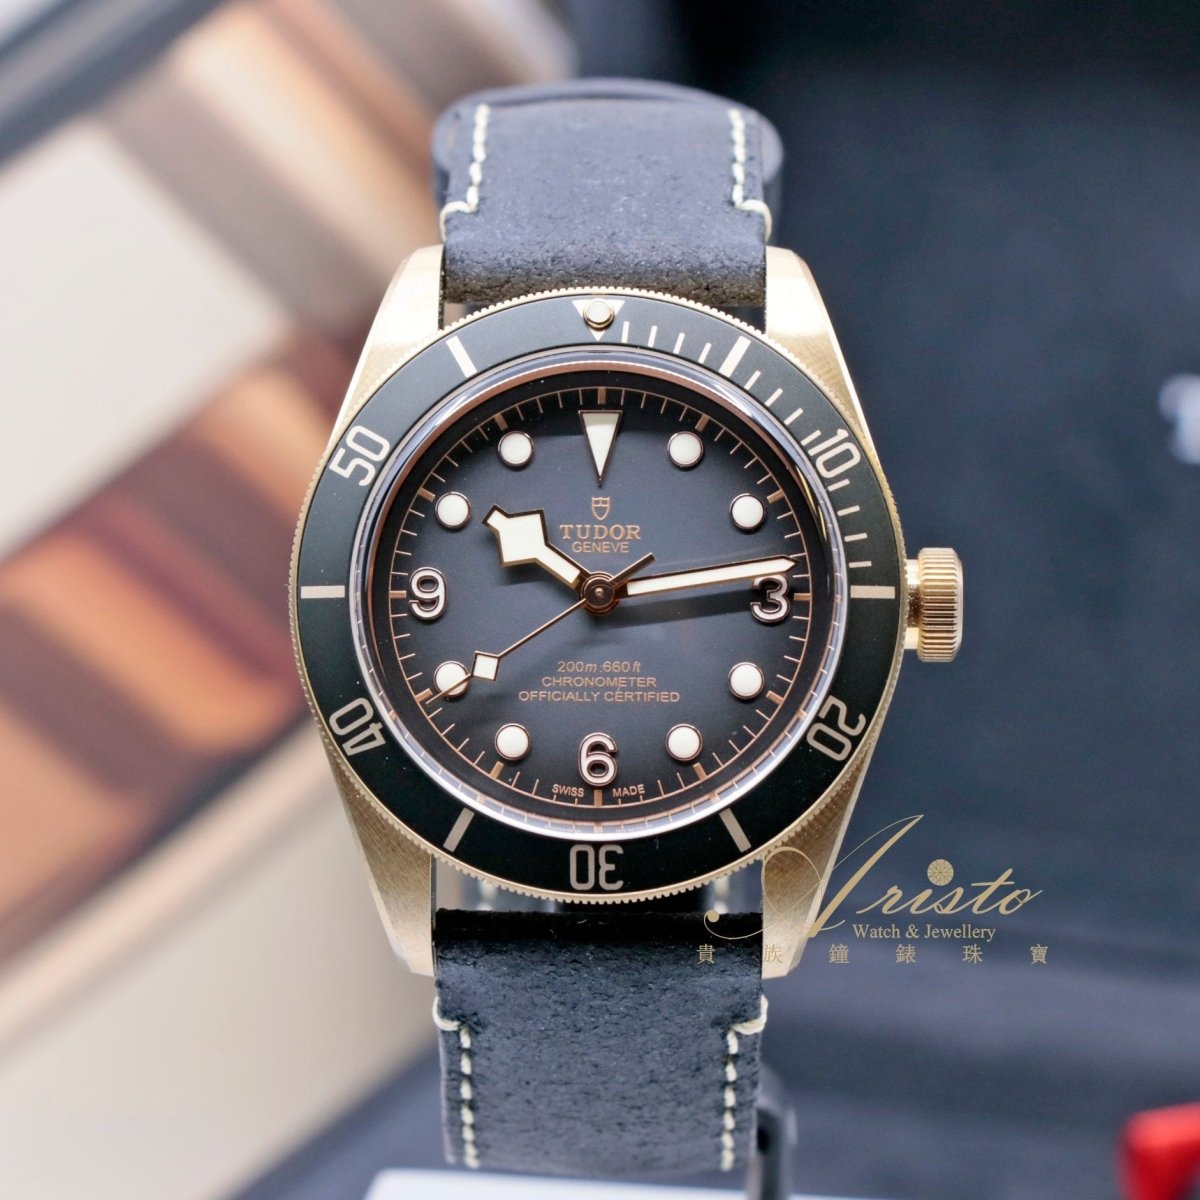 Tudor 79250BA-0001 Blackbay- Aristo Watch & Jewellery